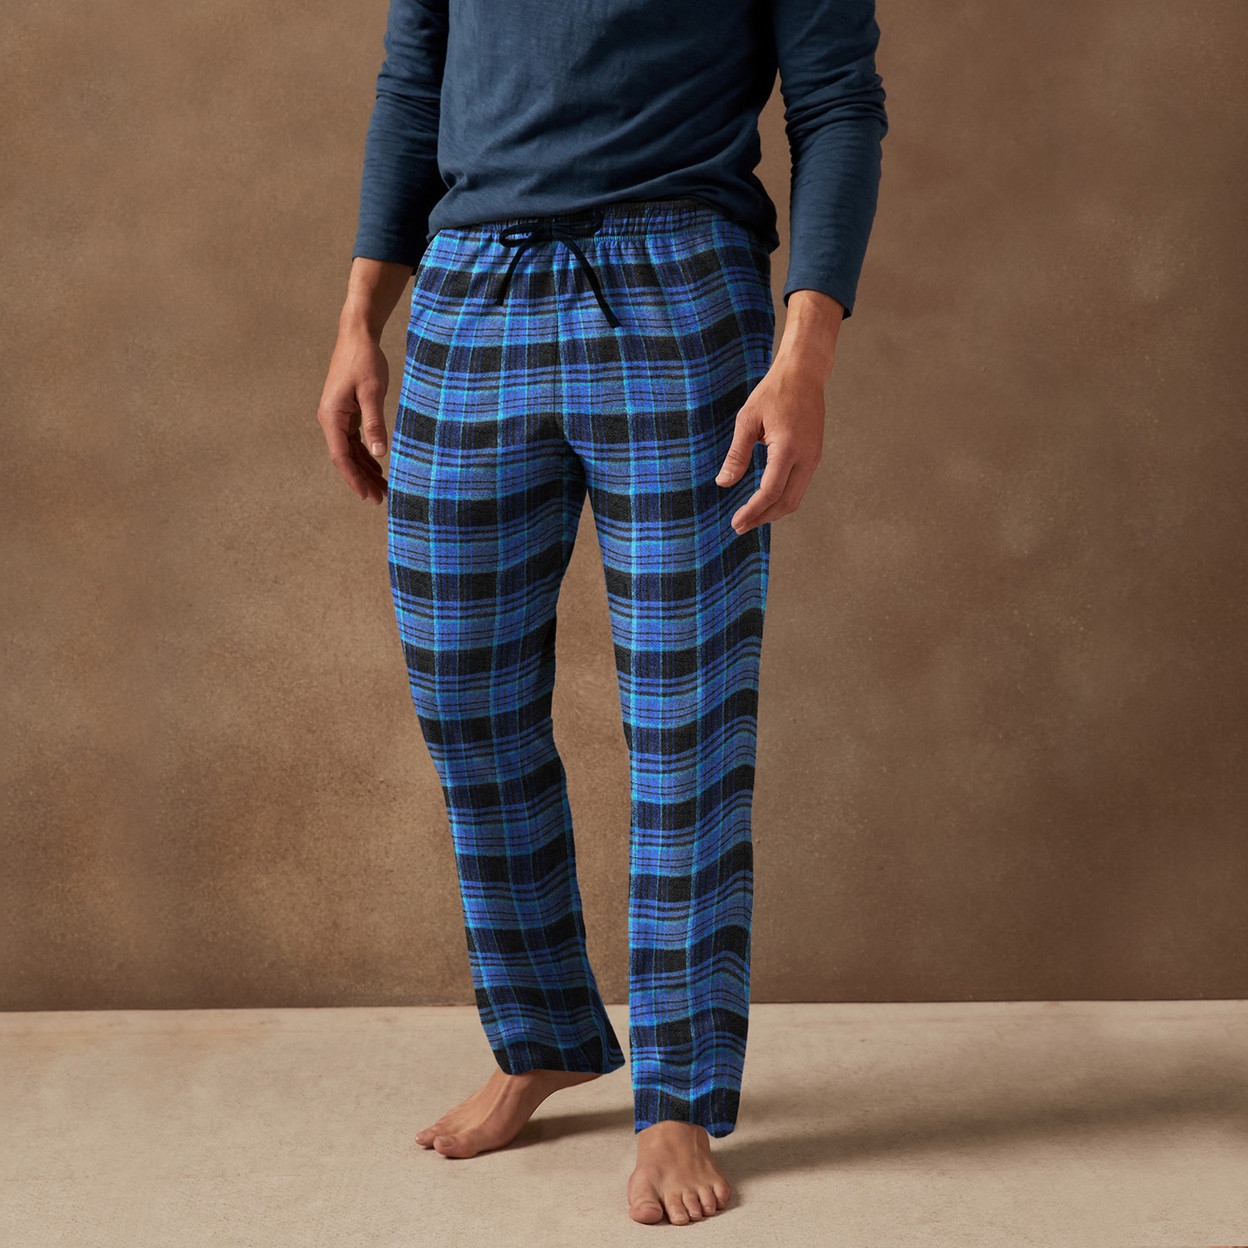 4-Pack: Men's Ultra Soft Cozy Flannel Fleece Plaid Pajama Sleep Bottom Lounge Pants - Small